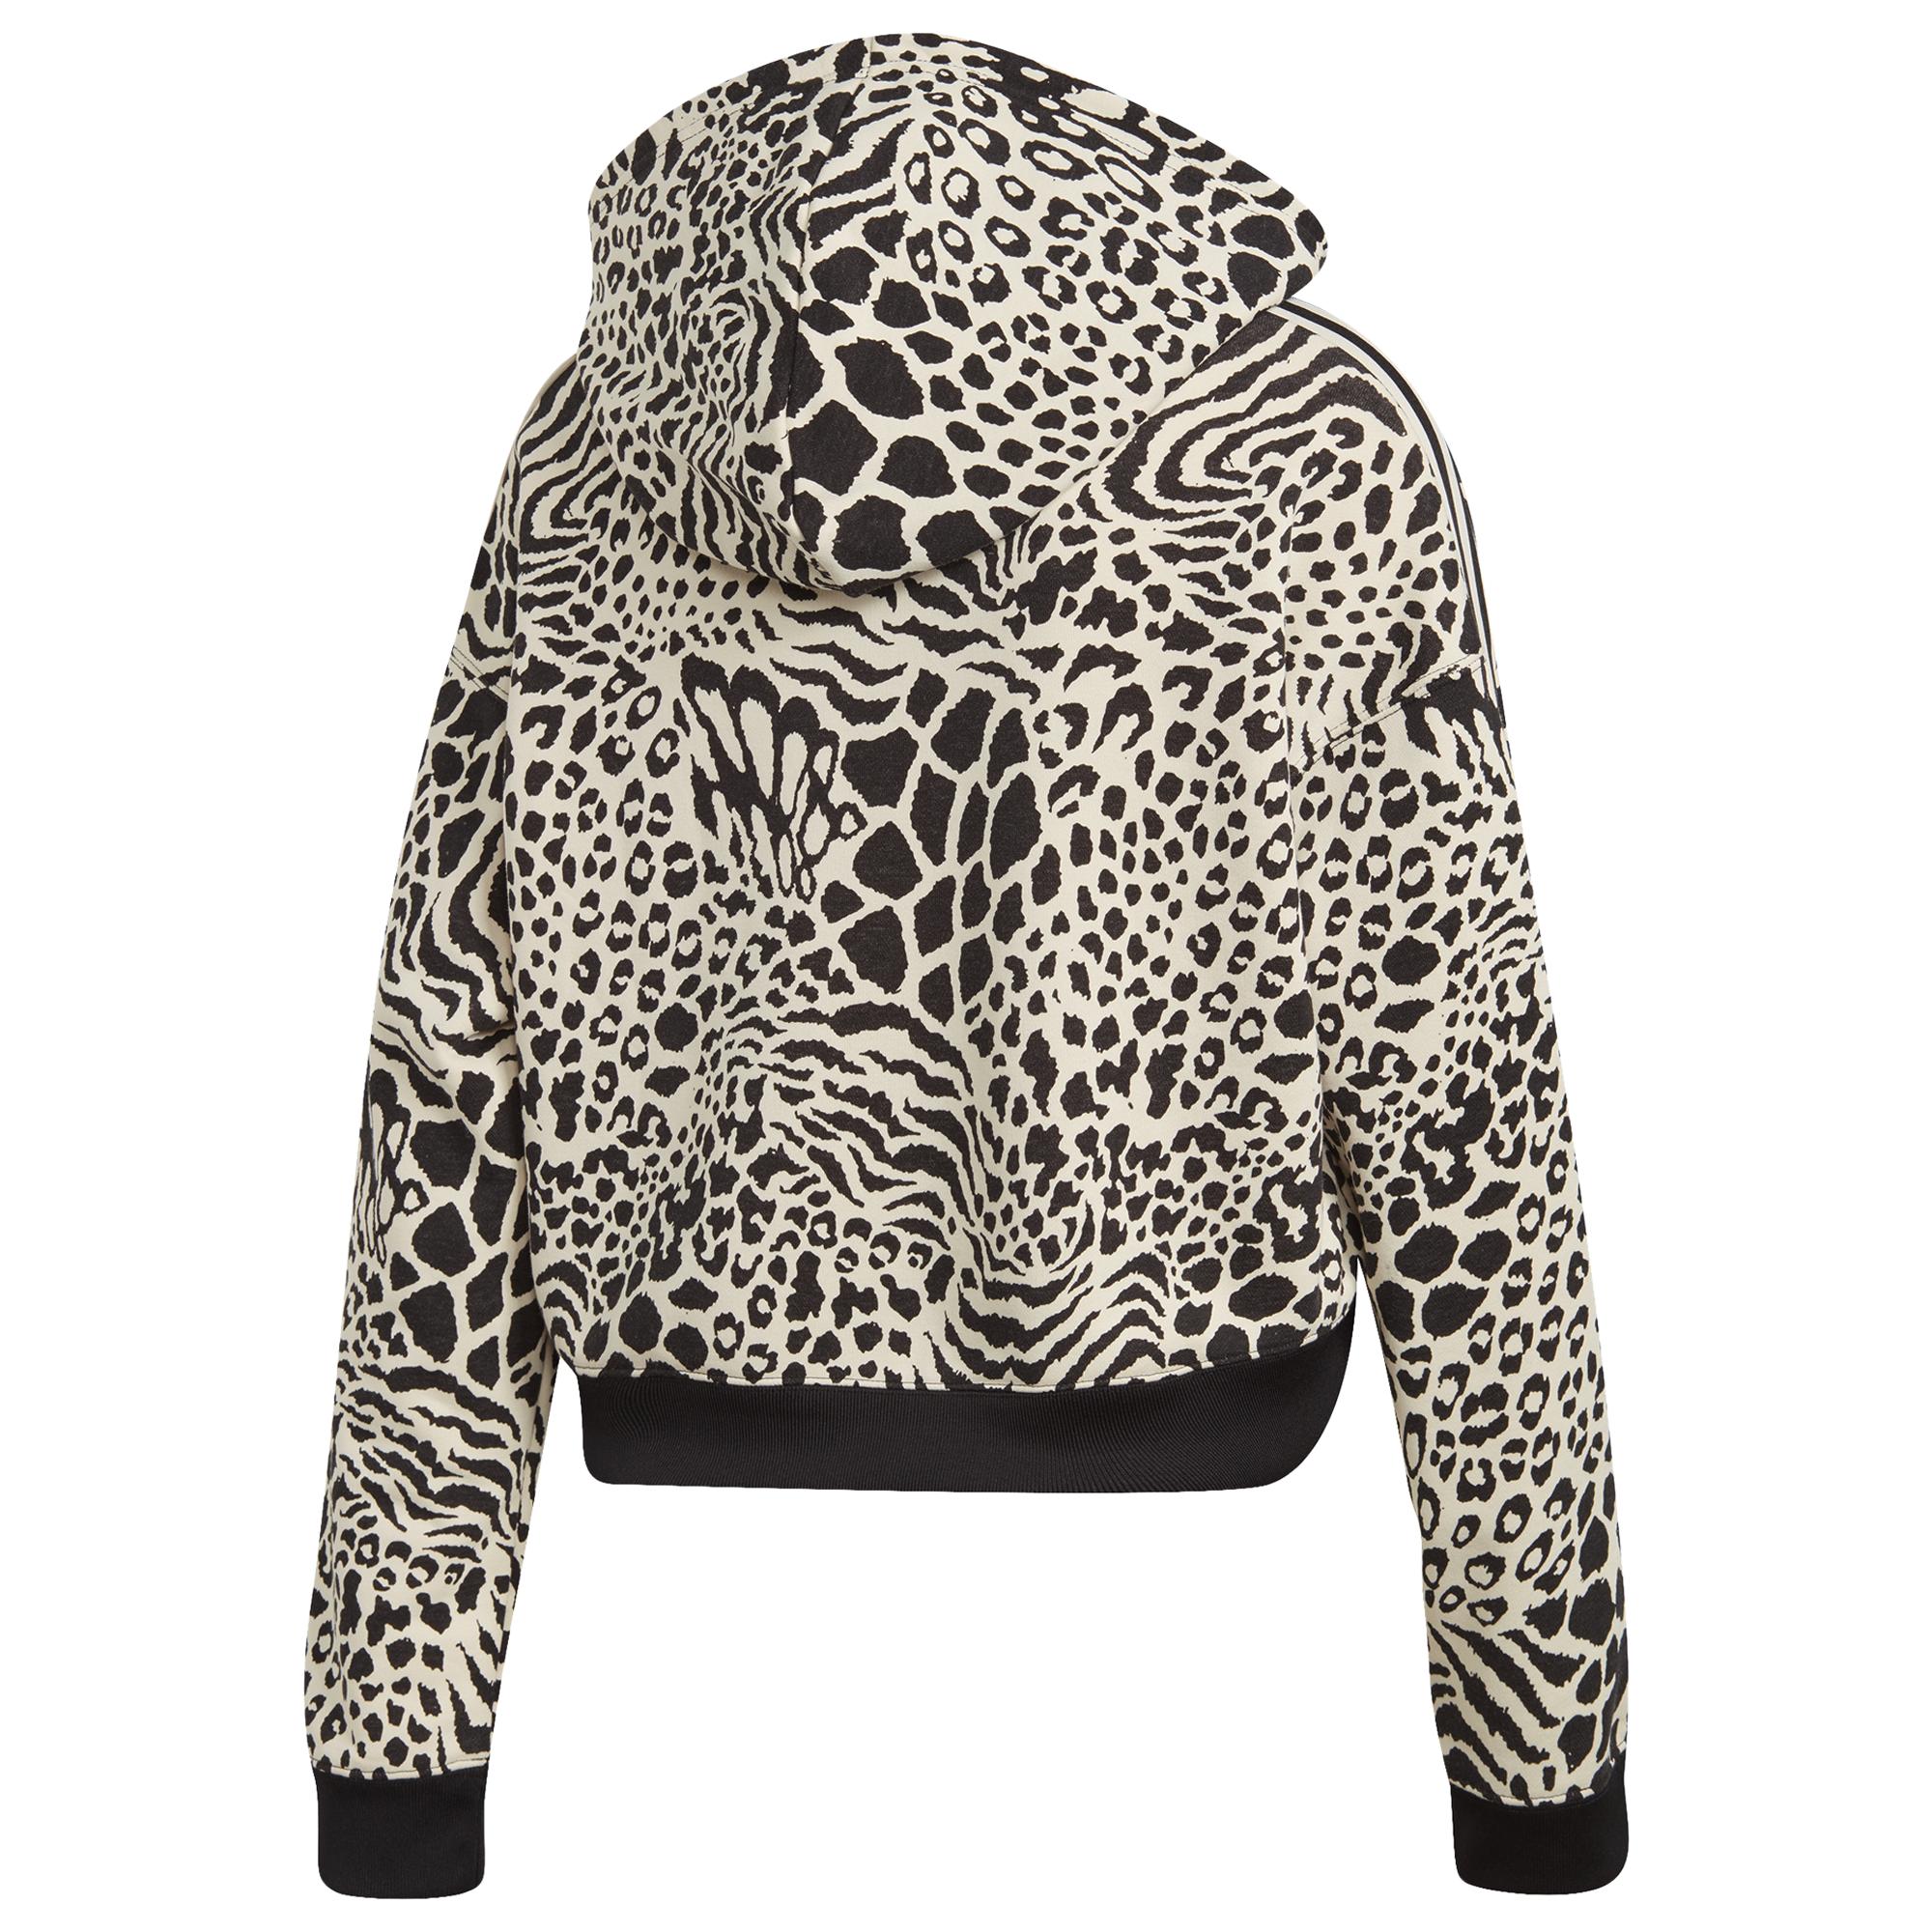 adidas leopard print clothing